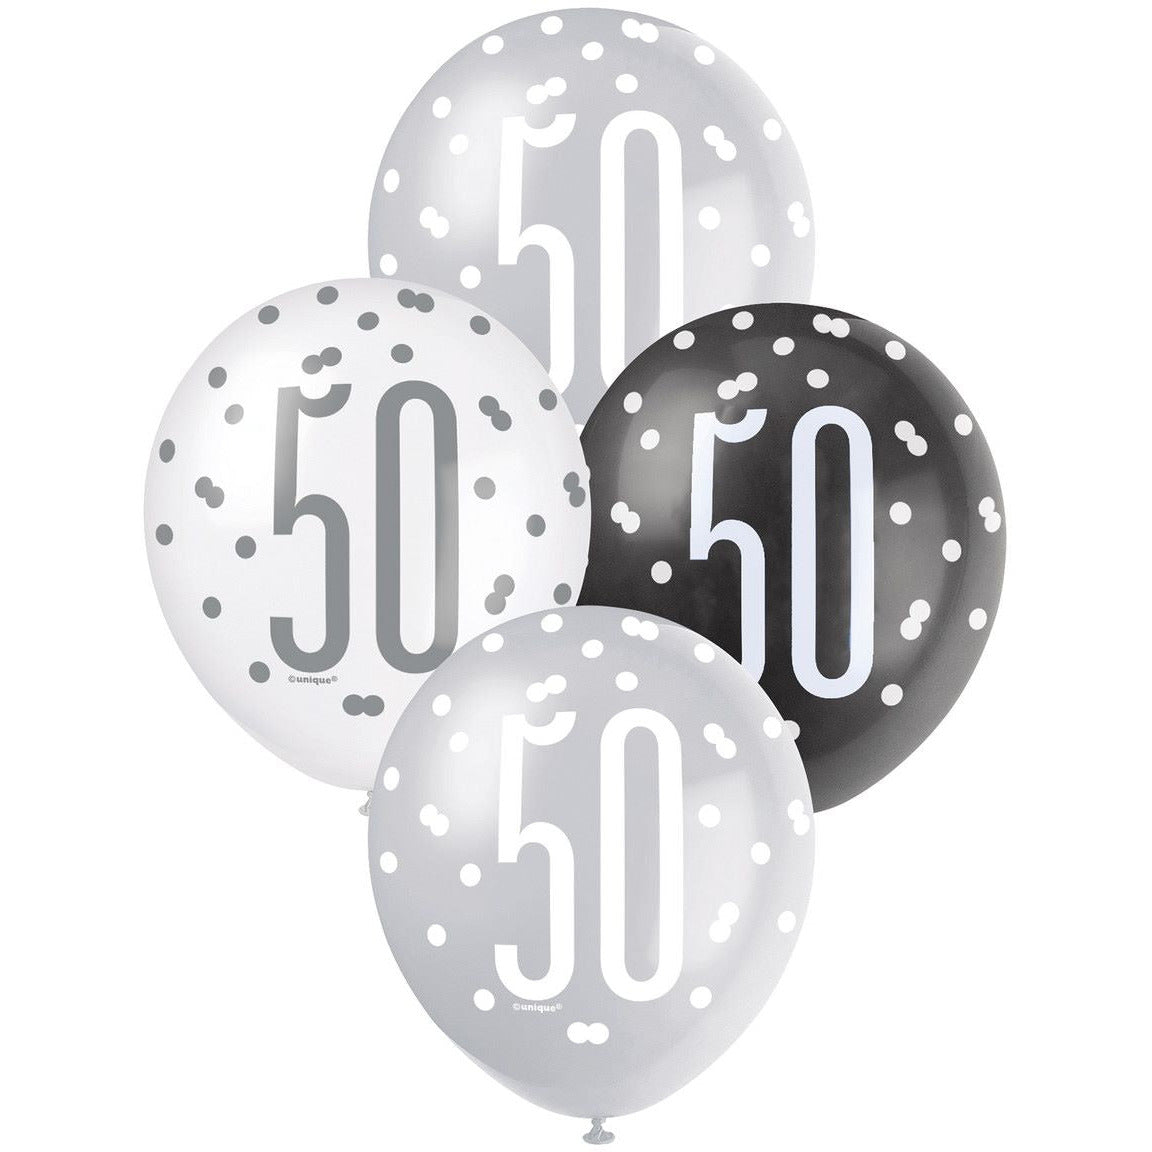 Black, Silver & White 50th Birthday Latex Balloons - Dollars and Sense